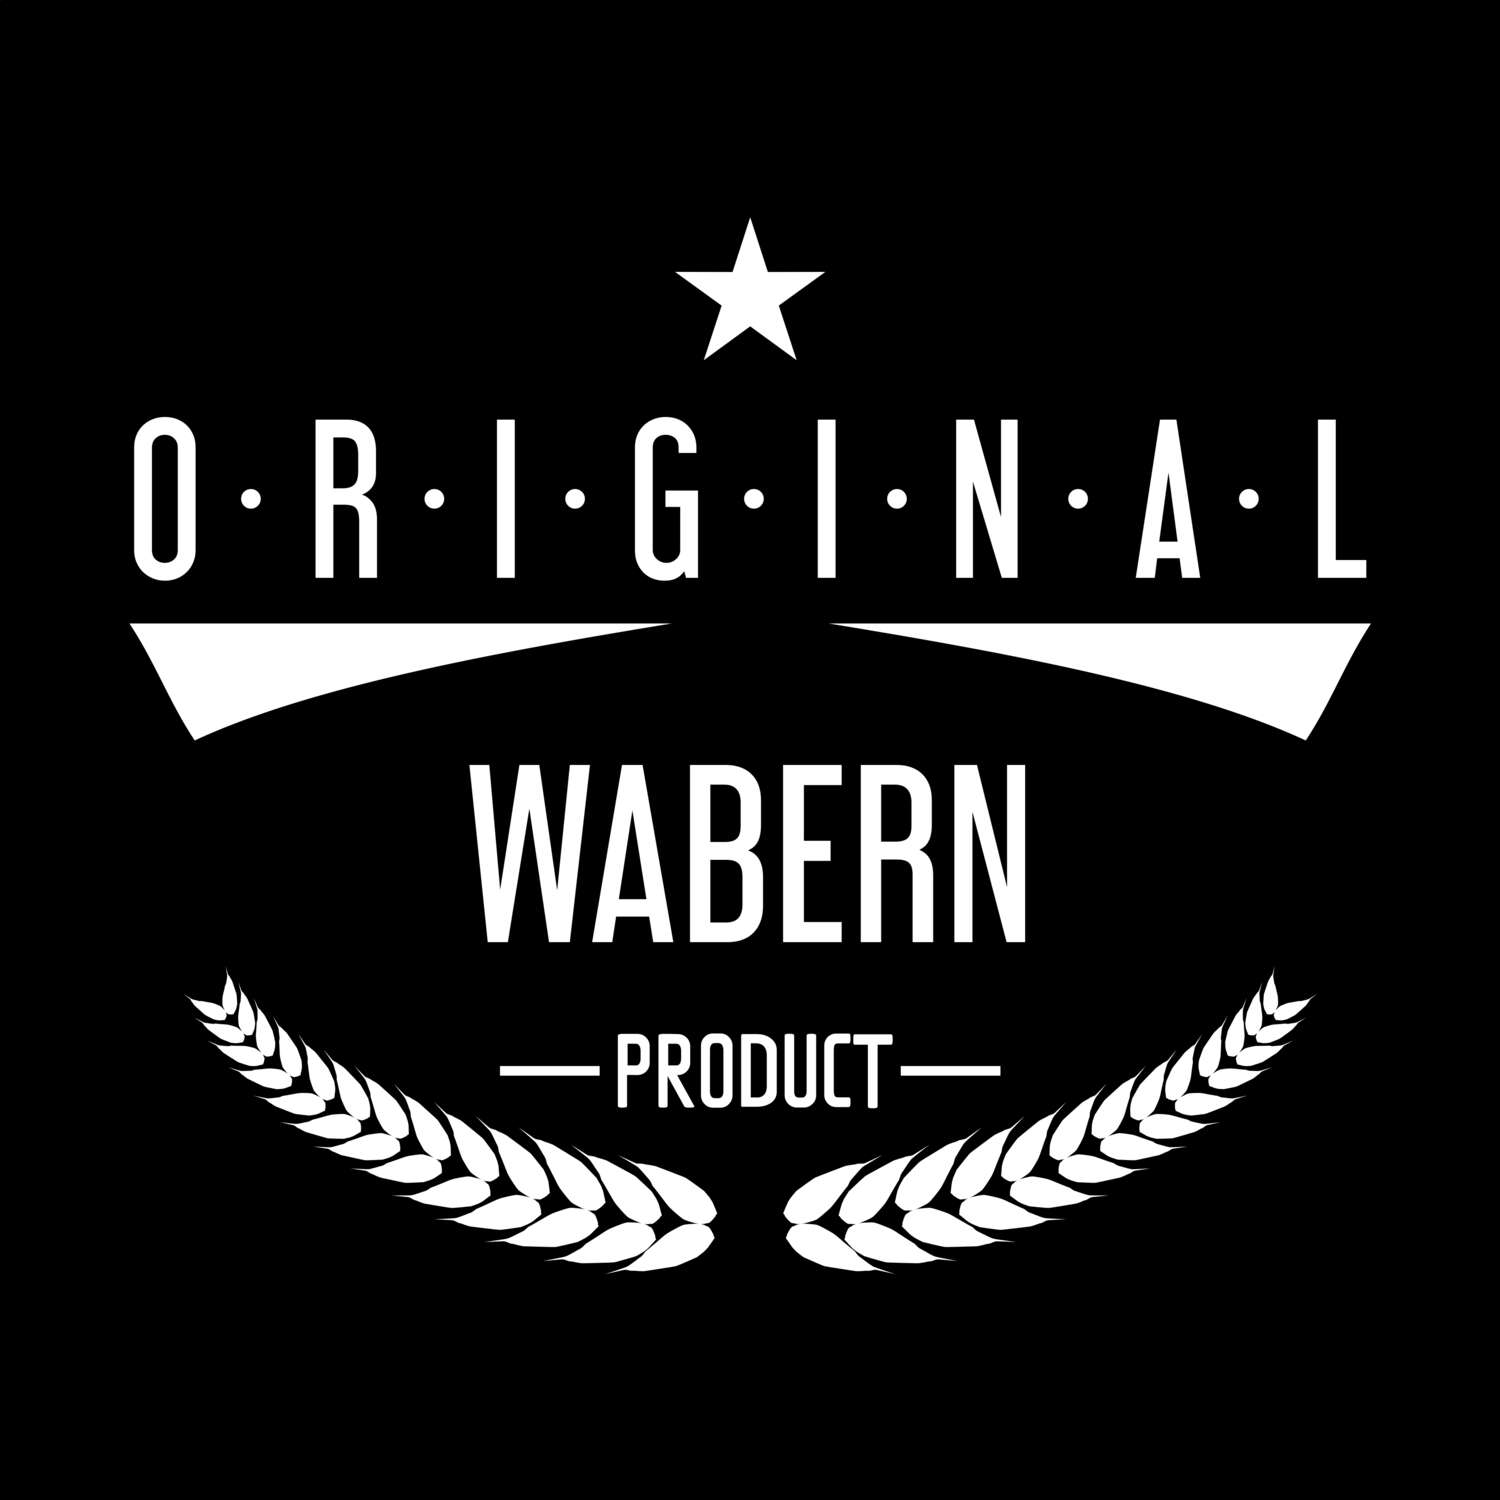 Wabern T-Shirt »Original Product«